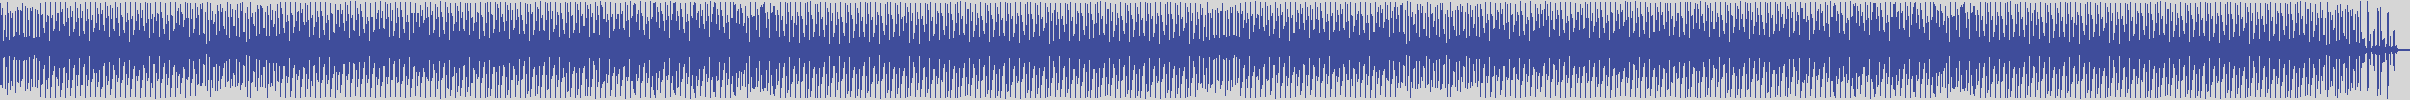 nf_boyz_records [NFY075] Tech 4 - Prepare [Basic Mix] audio wave form